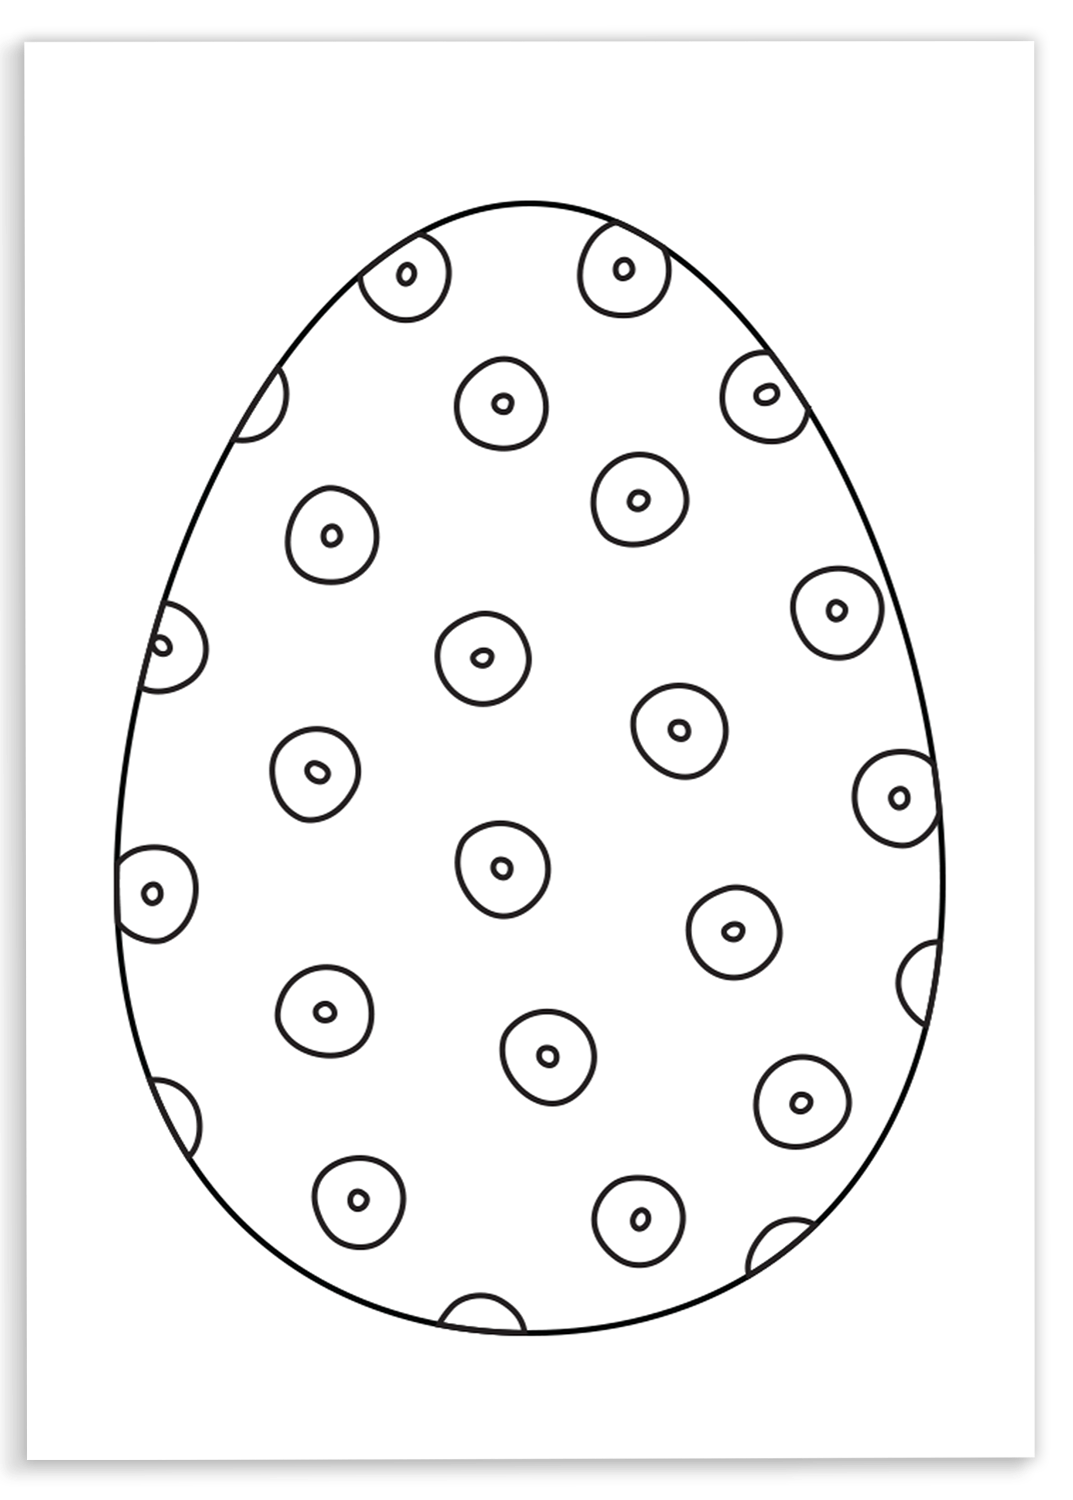 Dot egg coloring sheet â gilm press